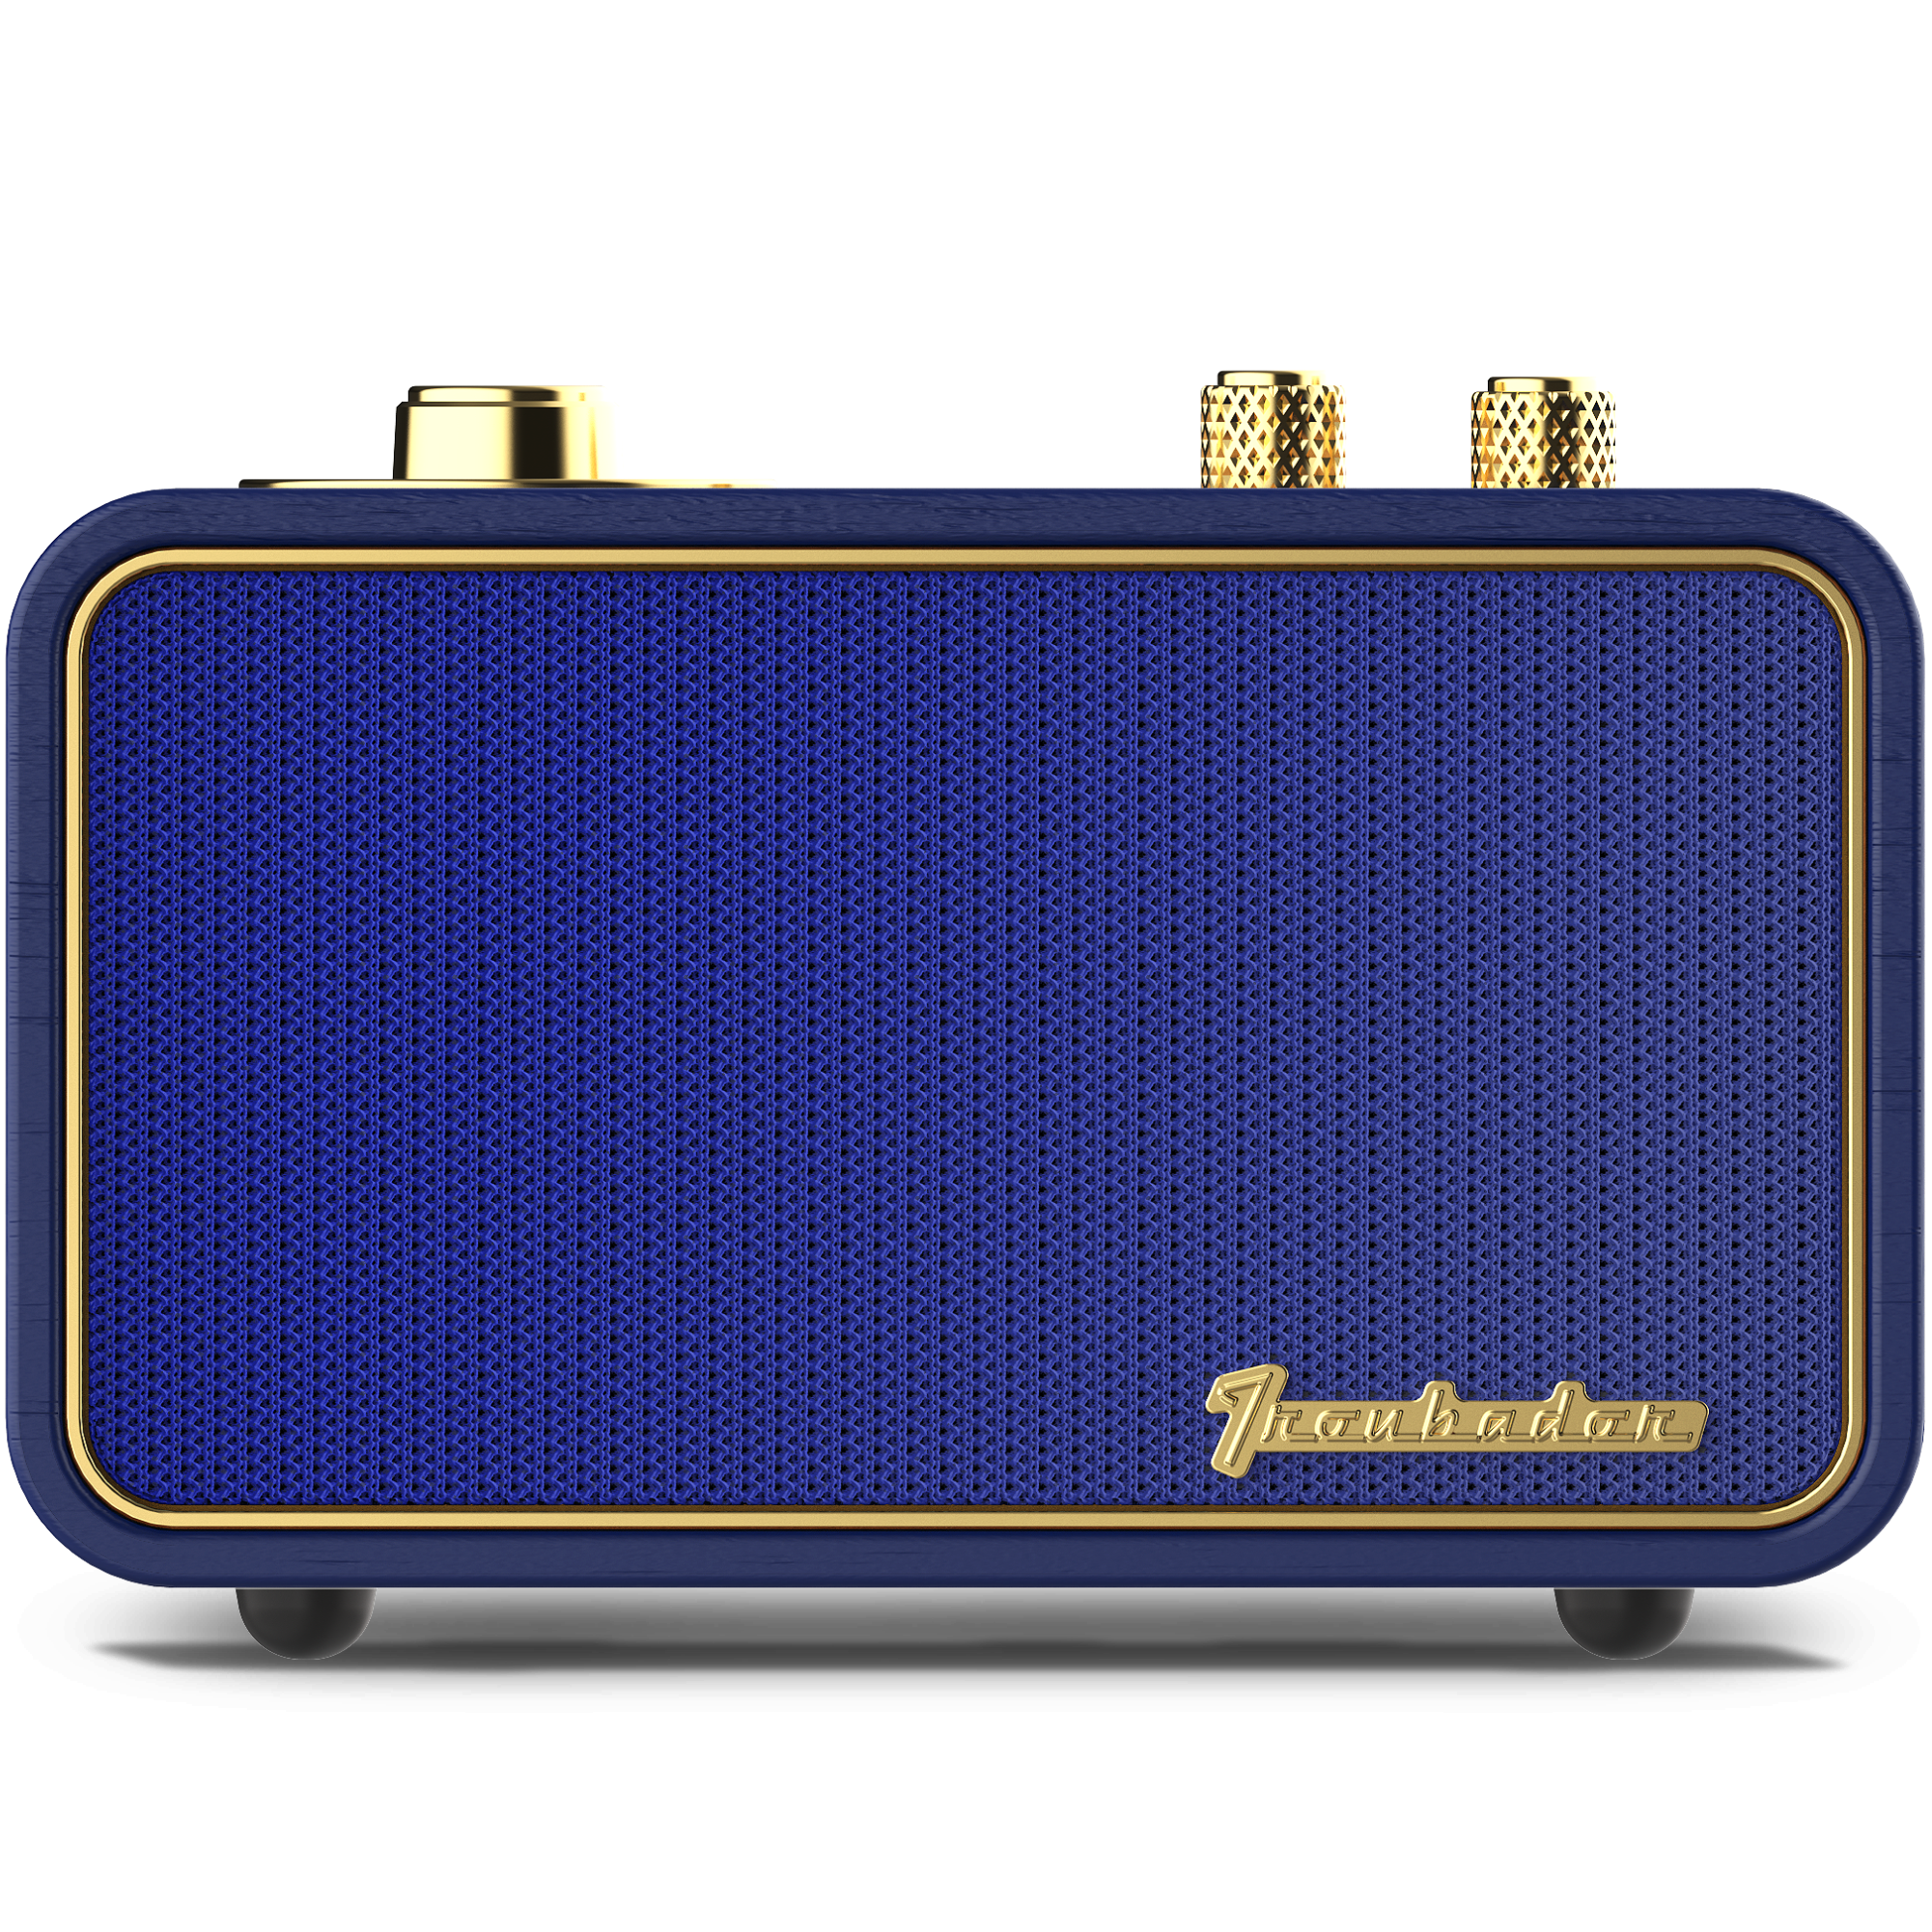 Trenbader Artlink Bluetooth Speaker with Radio